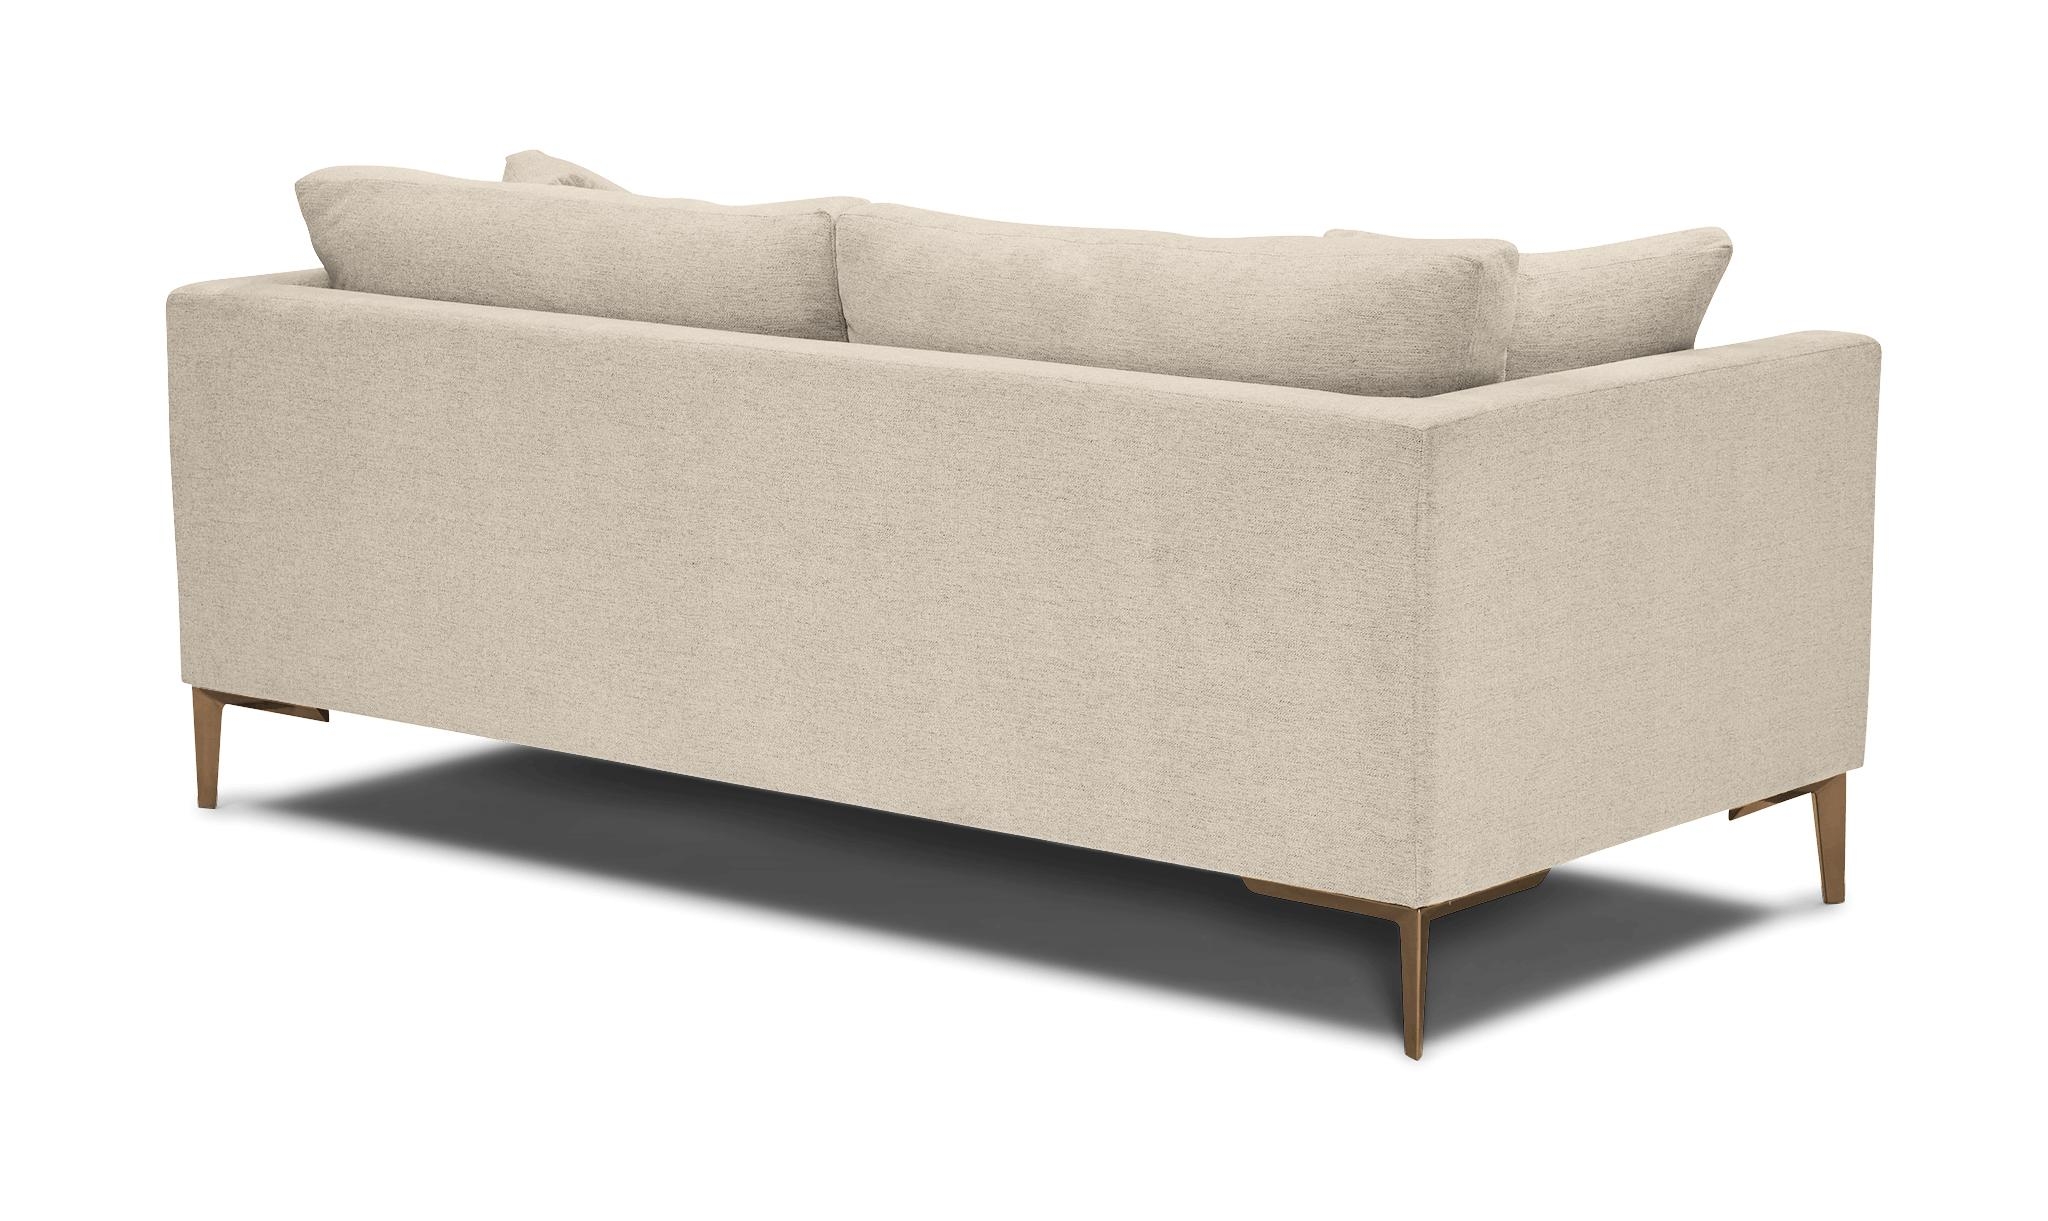 Beige/White Ainsley Mid Century Modern Sofa - Cody Sandstone - Image 3